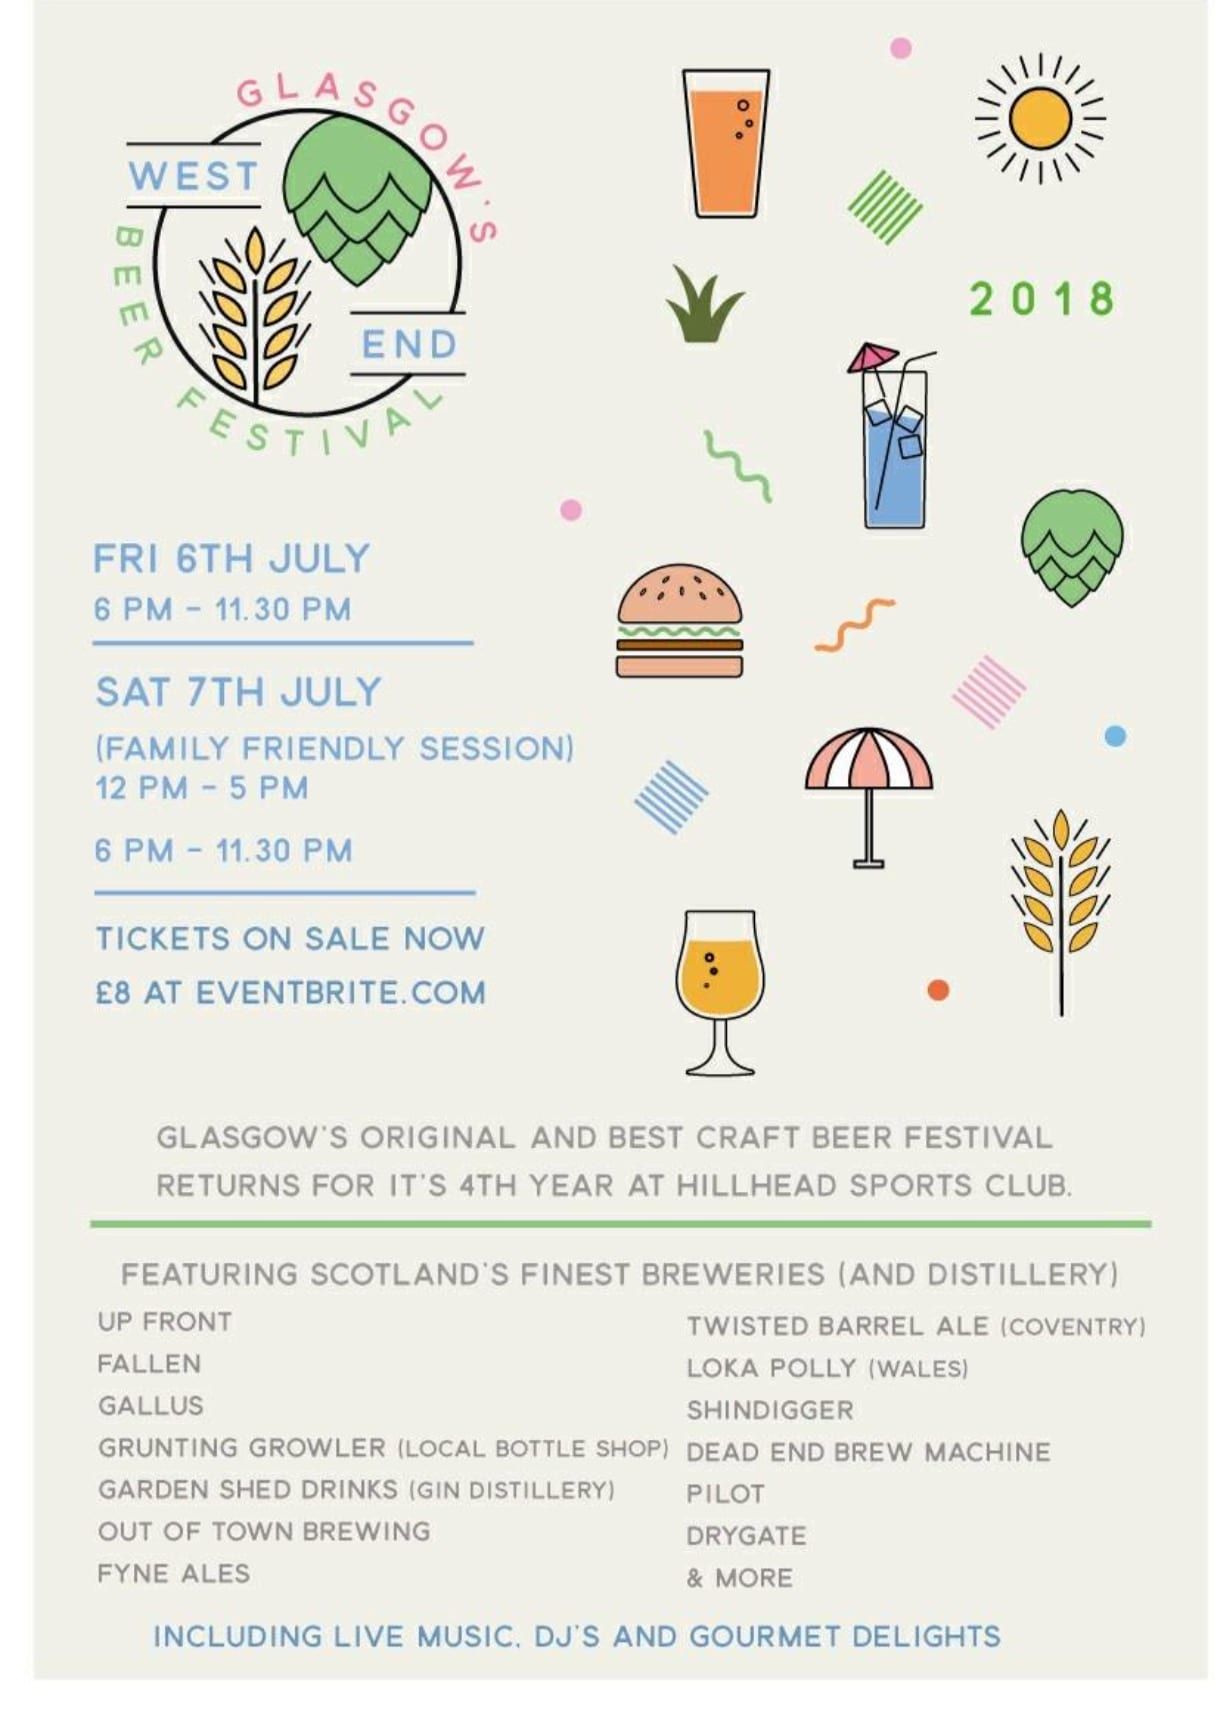 West End Beer Festival Glasgow 2018